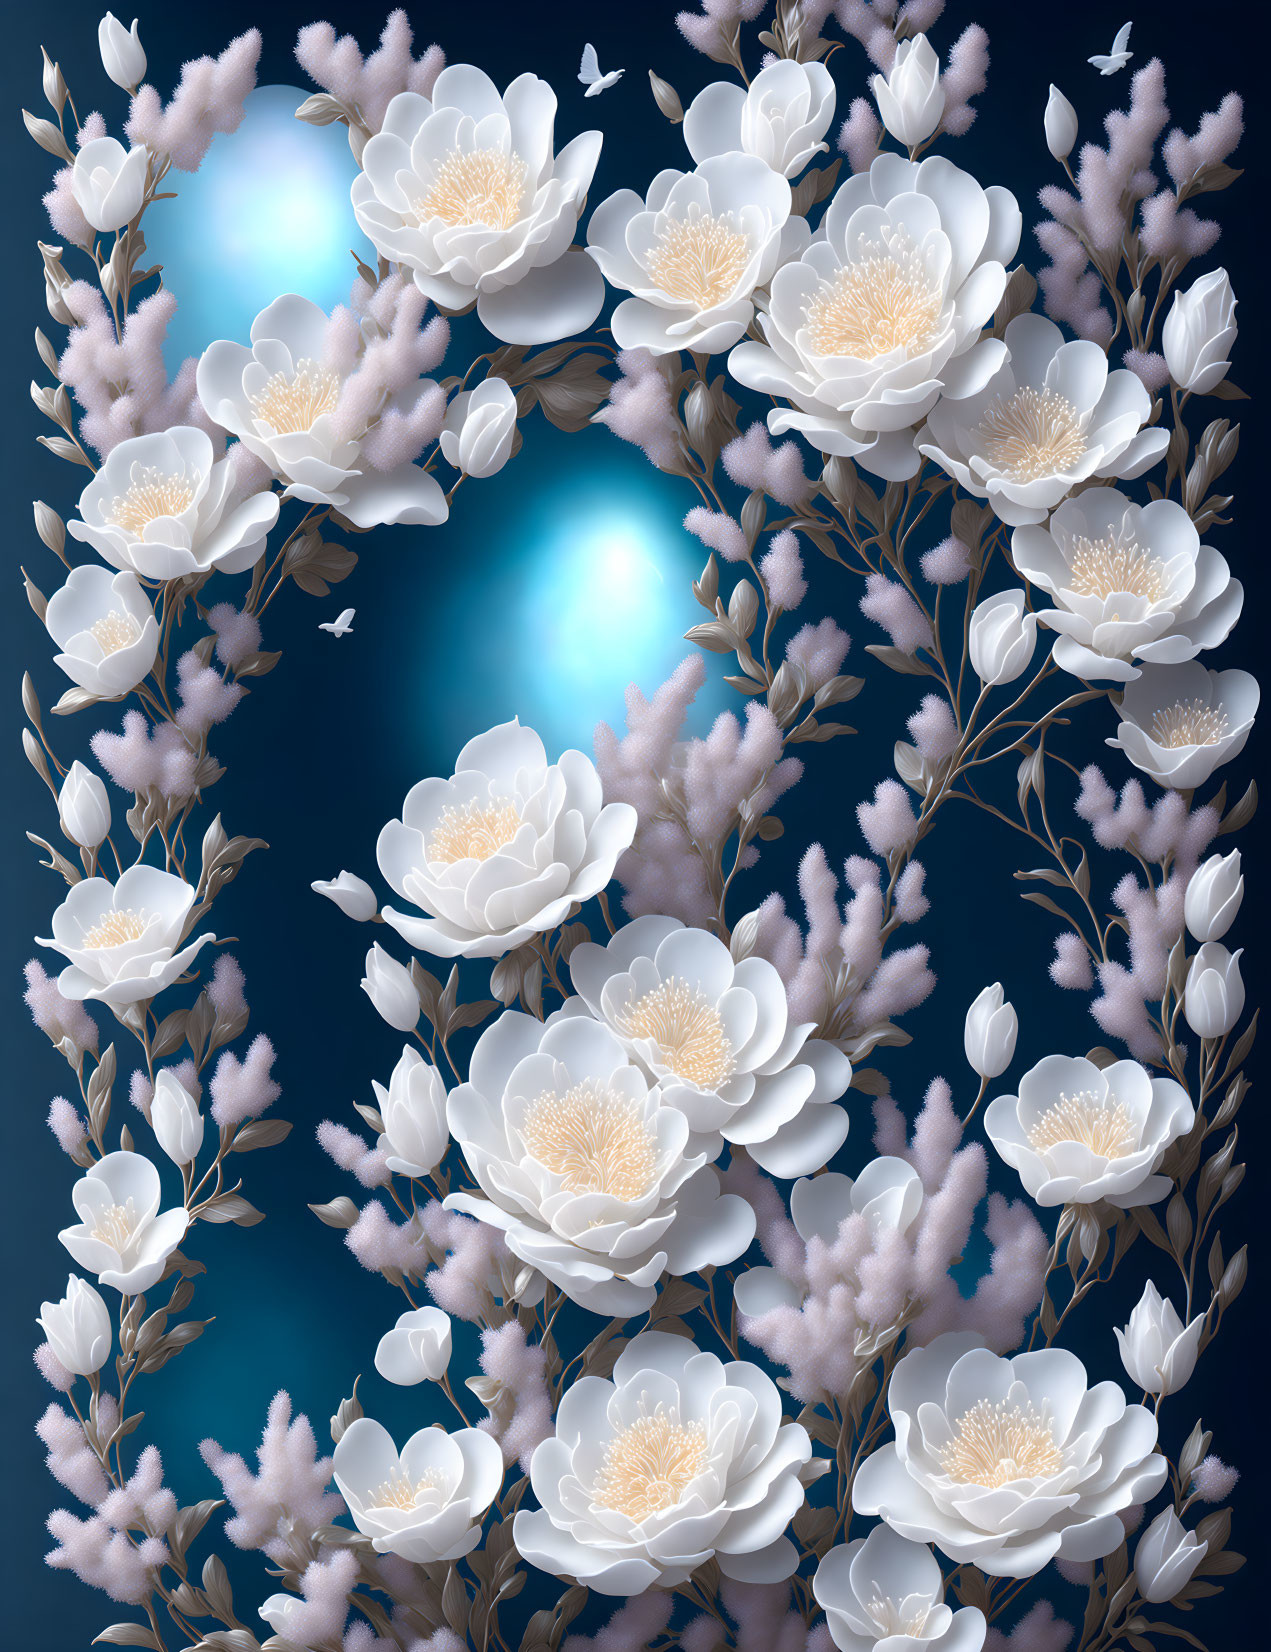 White and Pink Floral Arrangement on Dark Blue Background